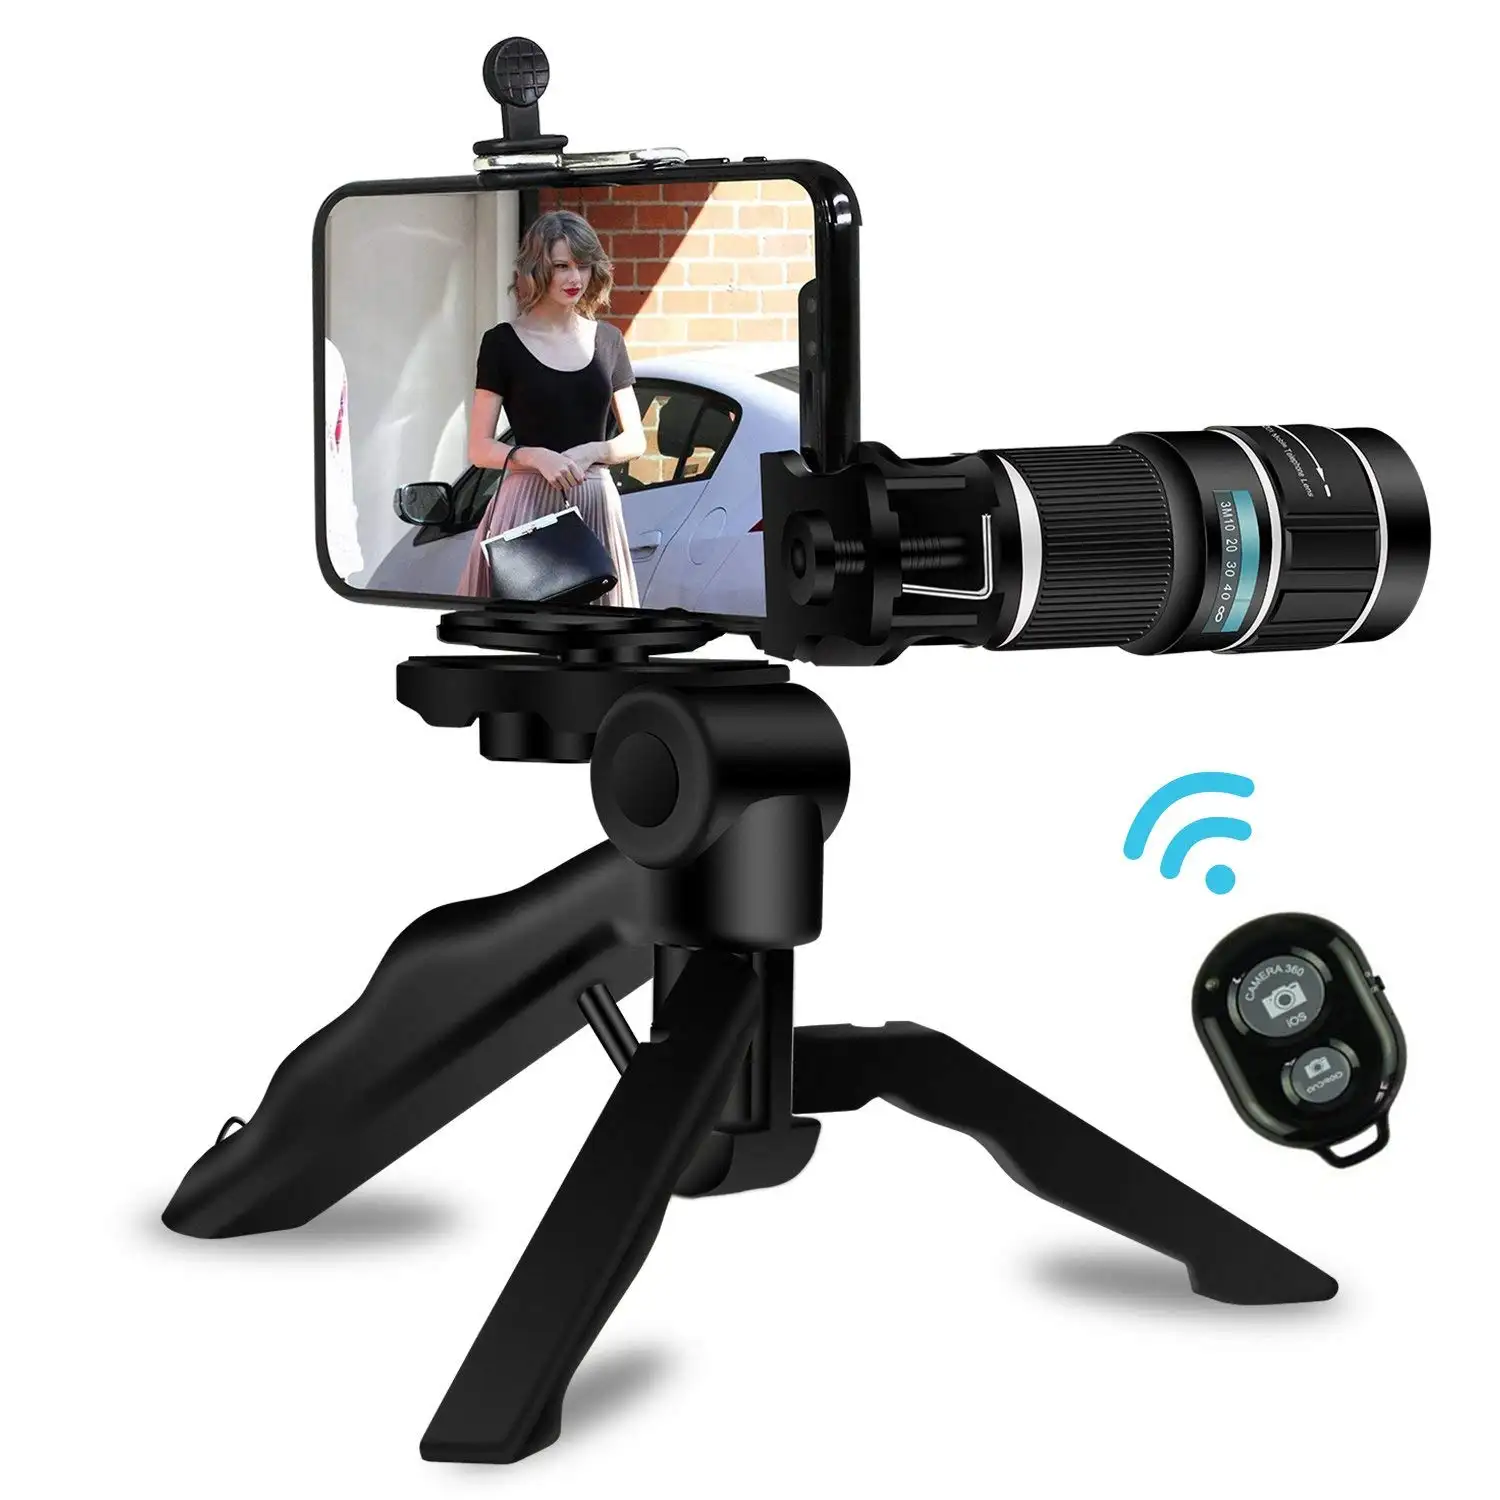 Cep telefonu telefoto kamera Lens,2018 yeni 20x telefoto Lens + esnek telefon tripodu + fotoğraf tutucu + kablosuz uzaktan deklanşör